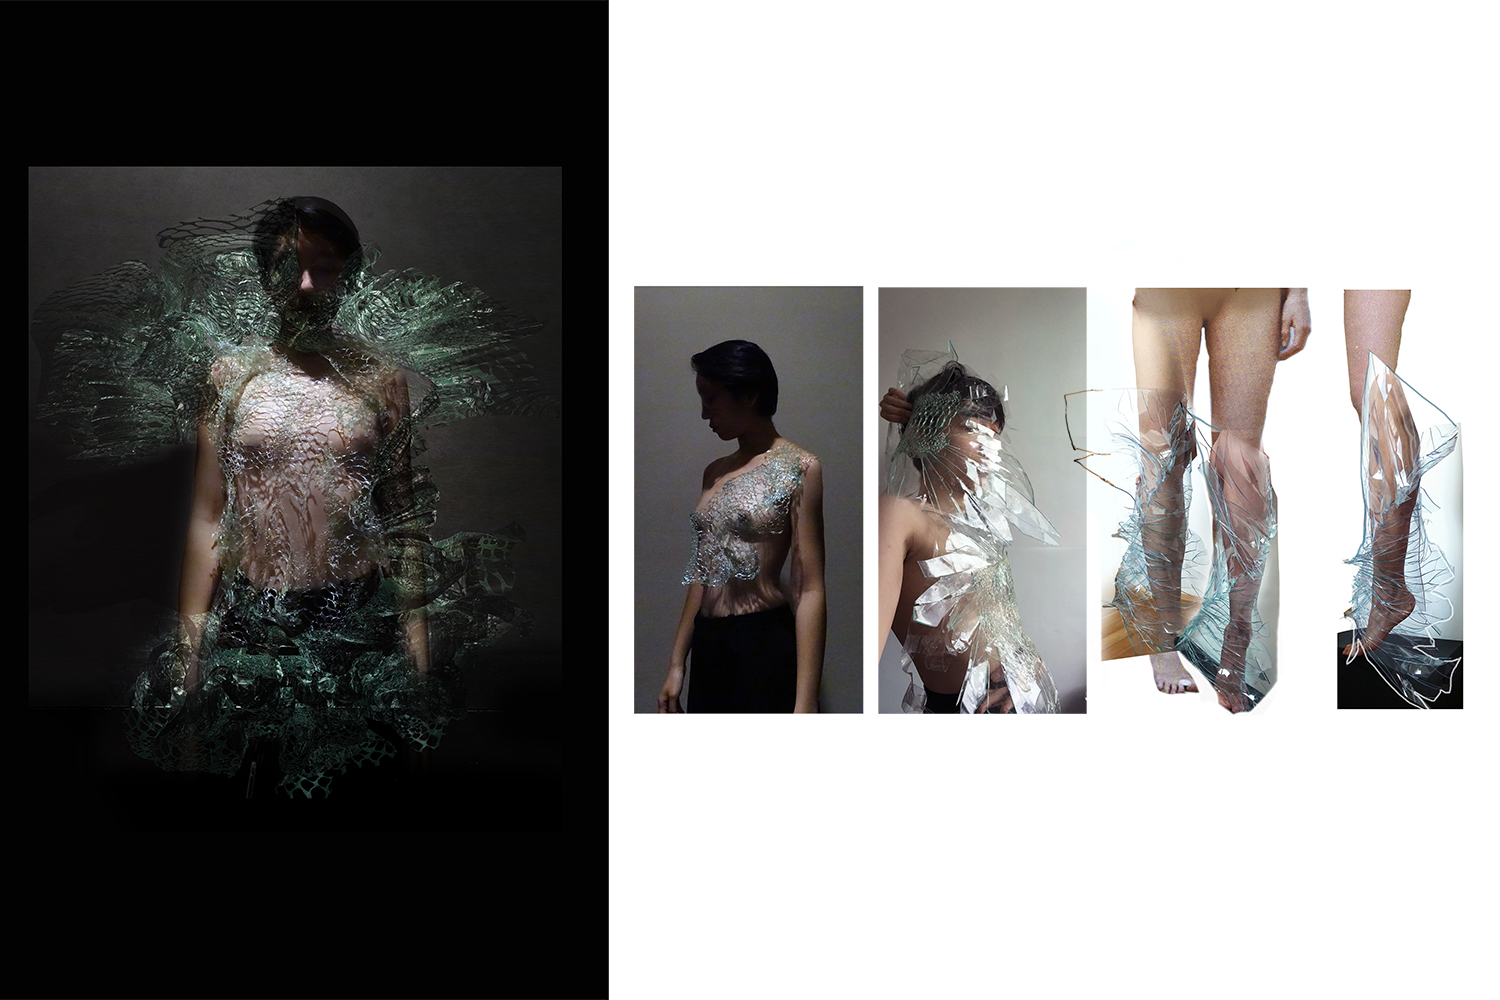 Scarlett Yang envisions clothes as a circular living system